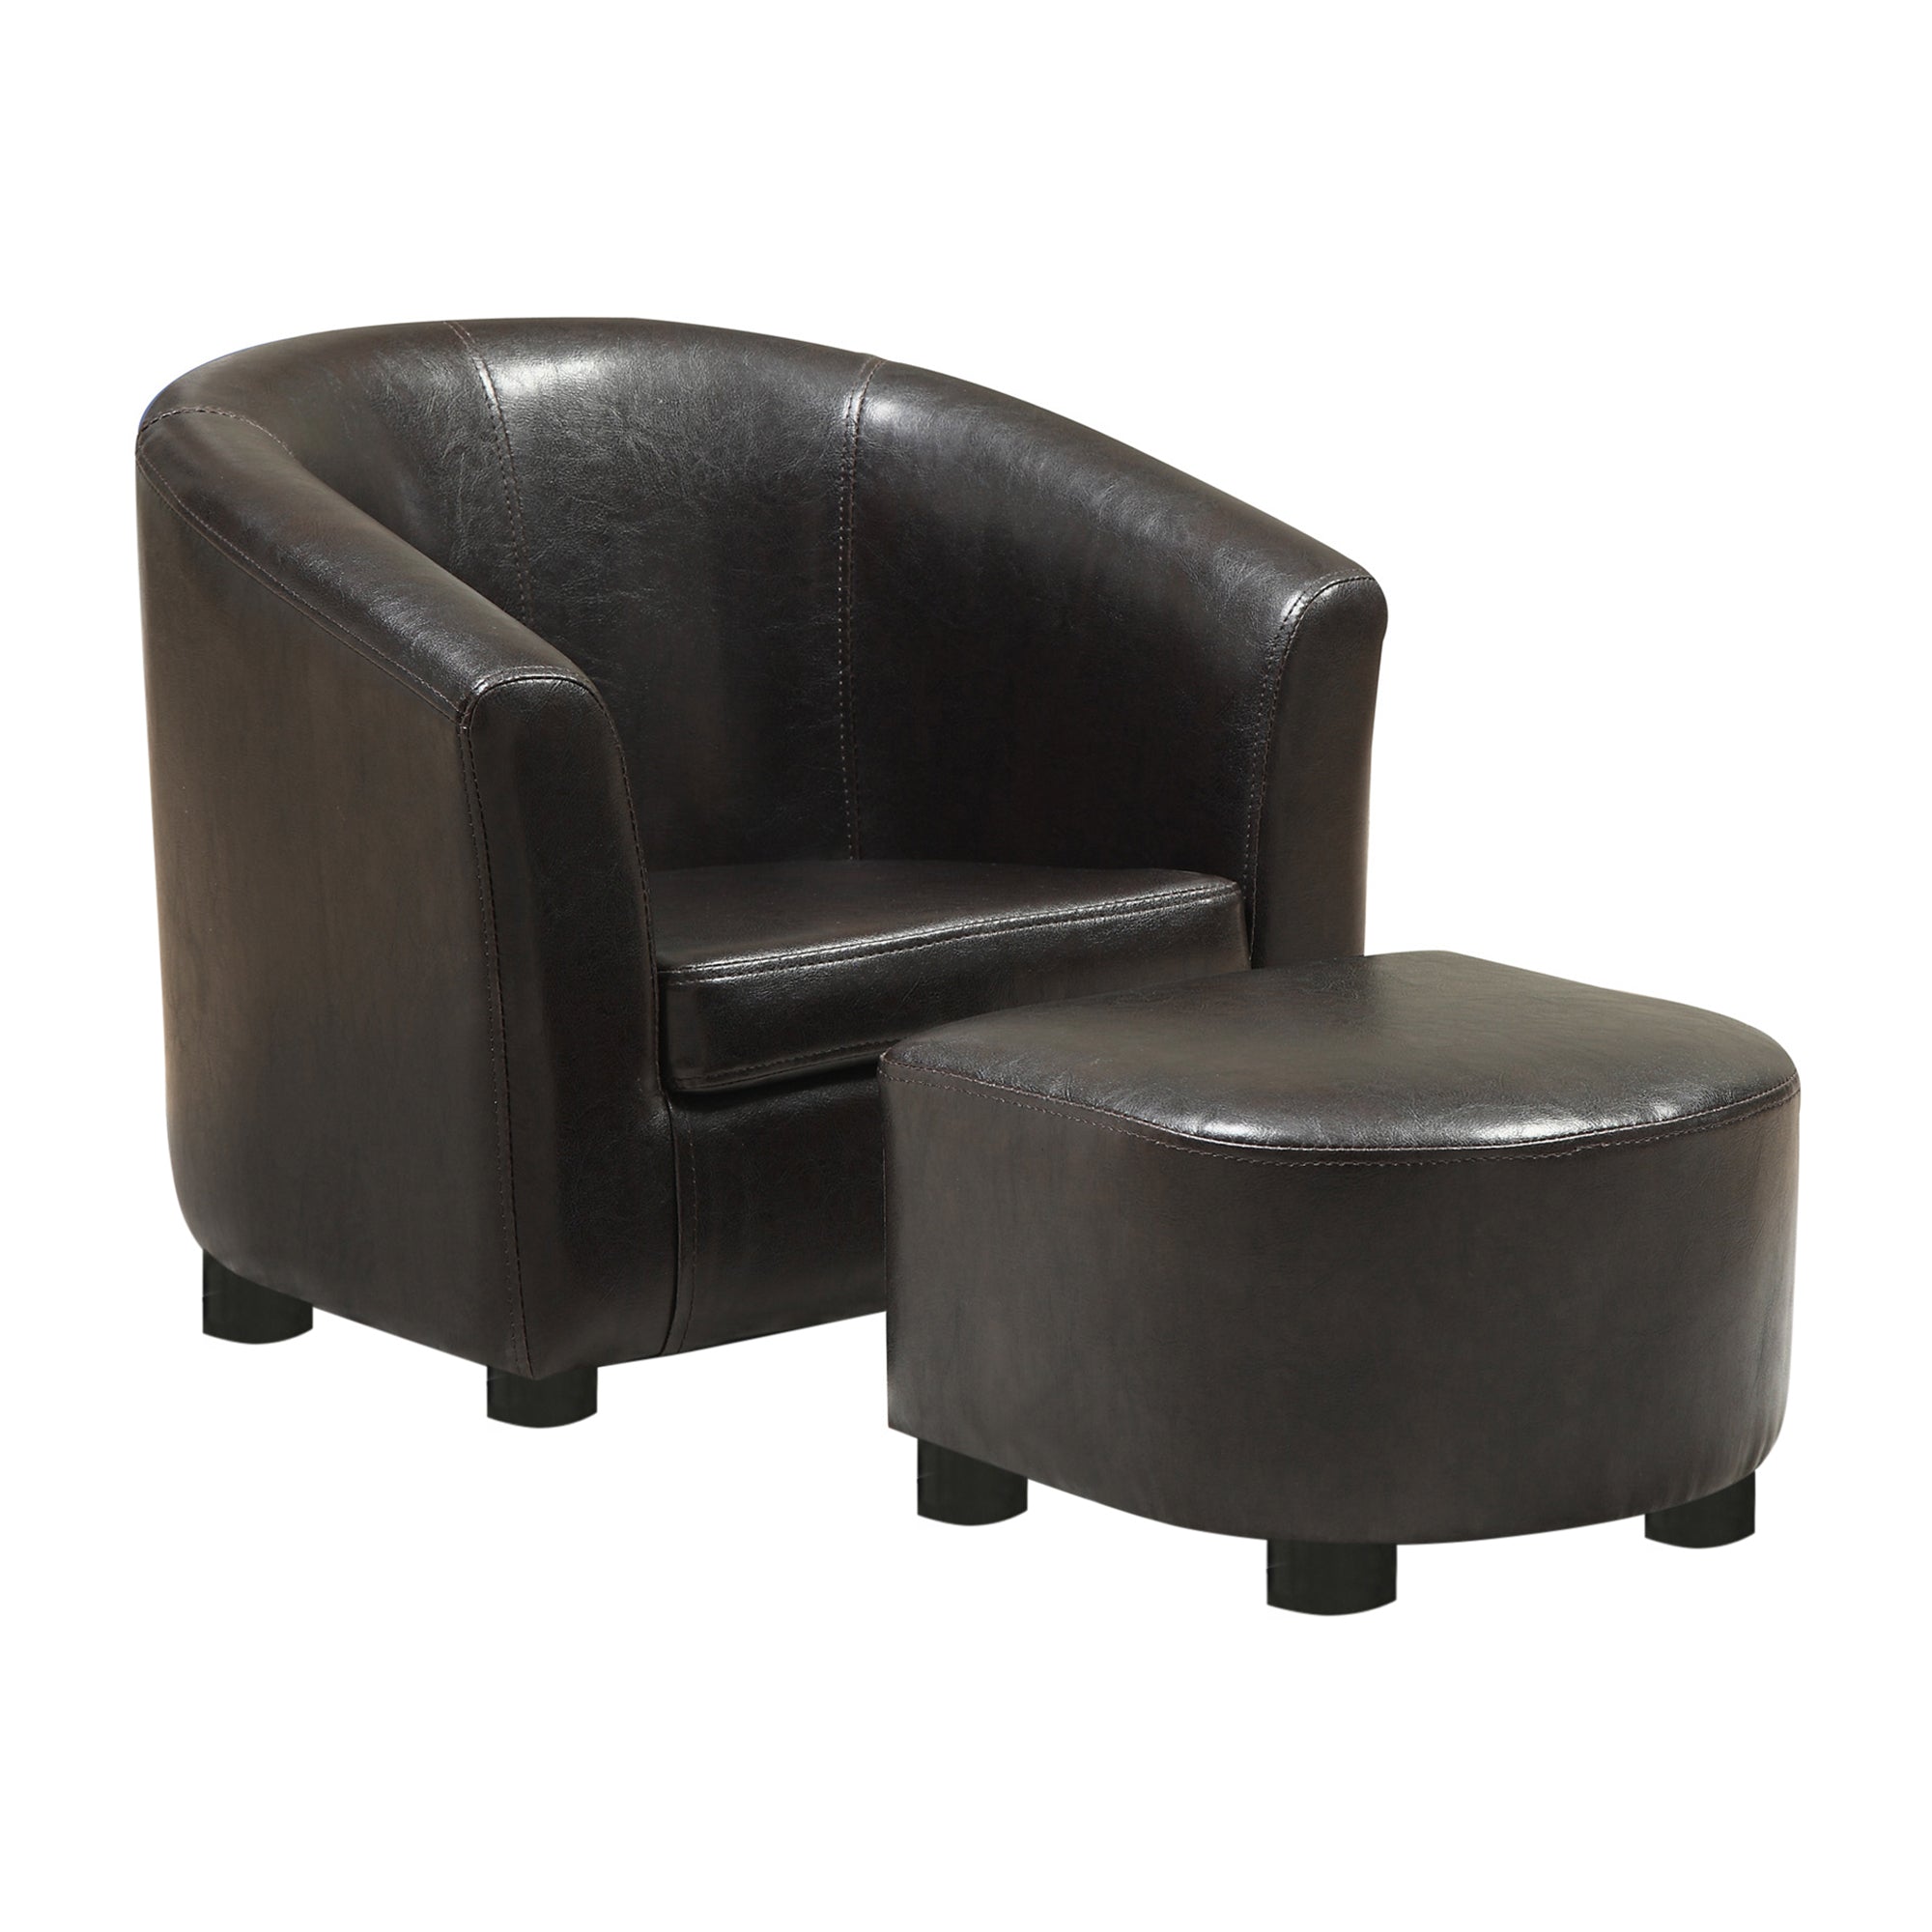 Juvenile Chair - 2 Pcs Set / Dark Brown Leather-Look